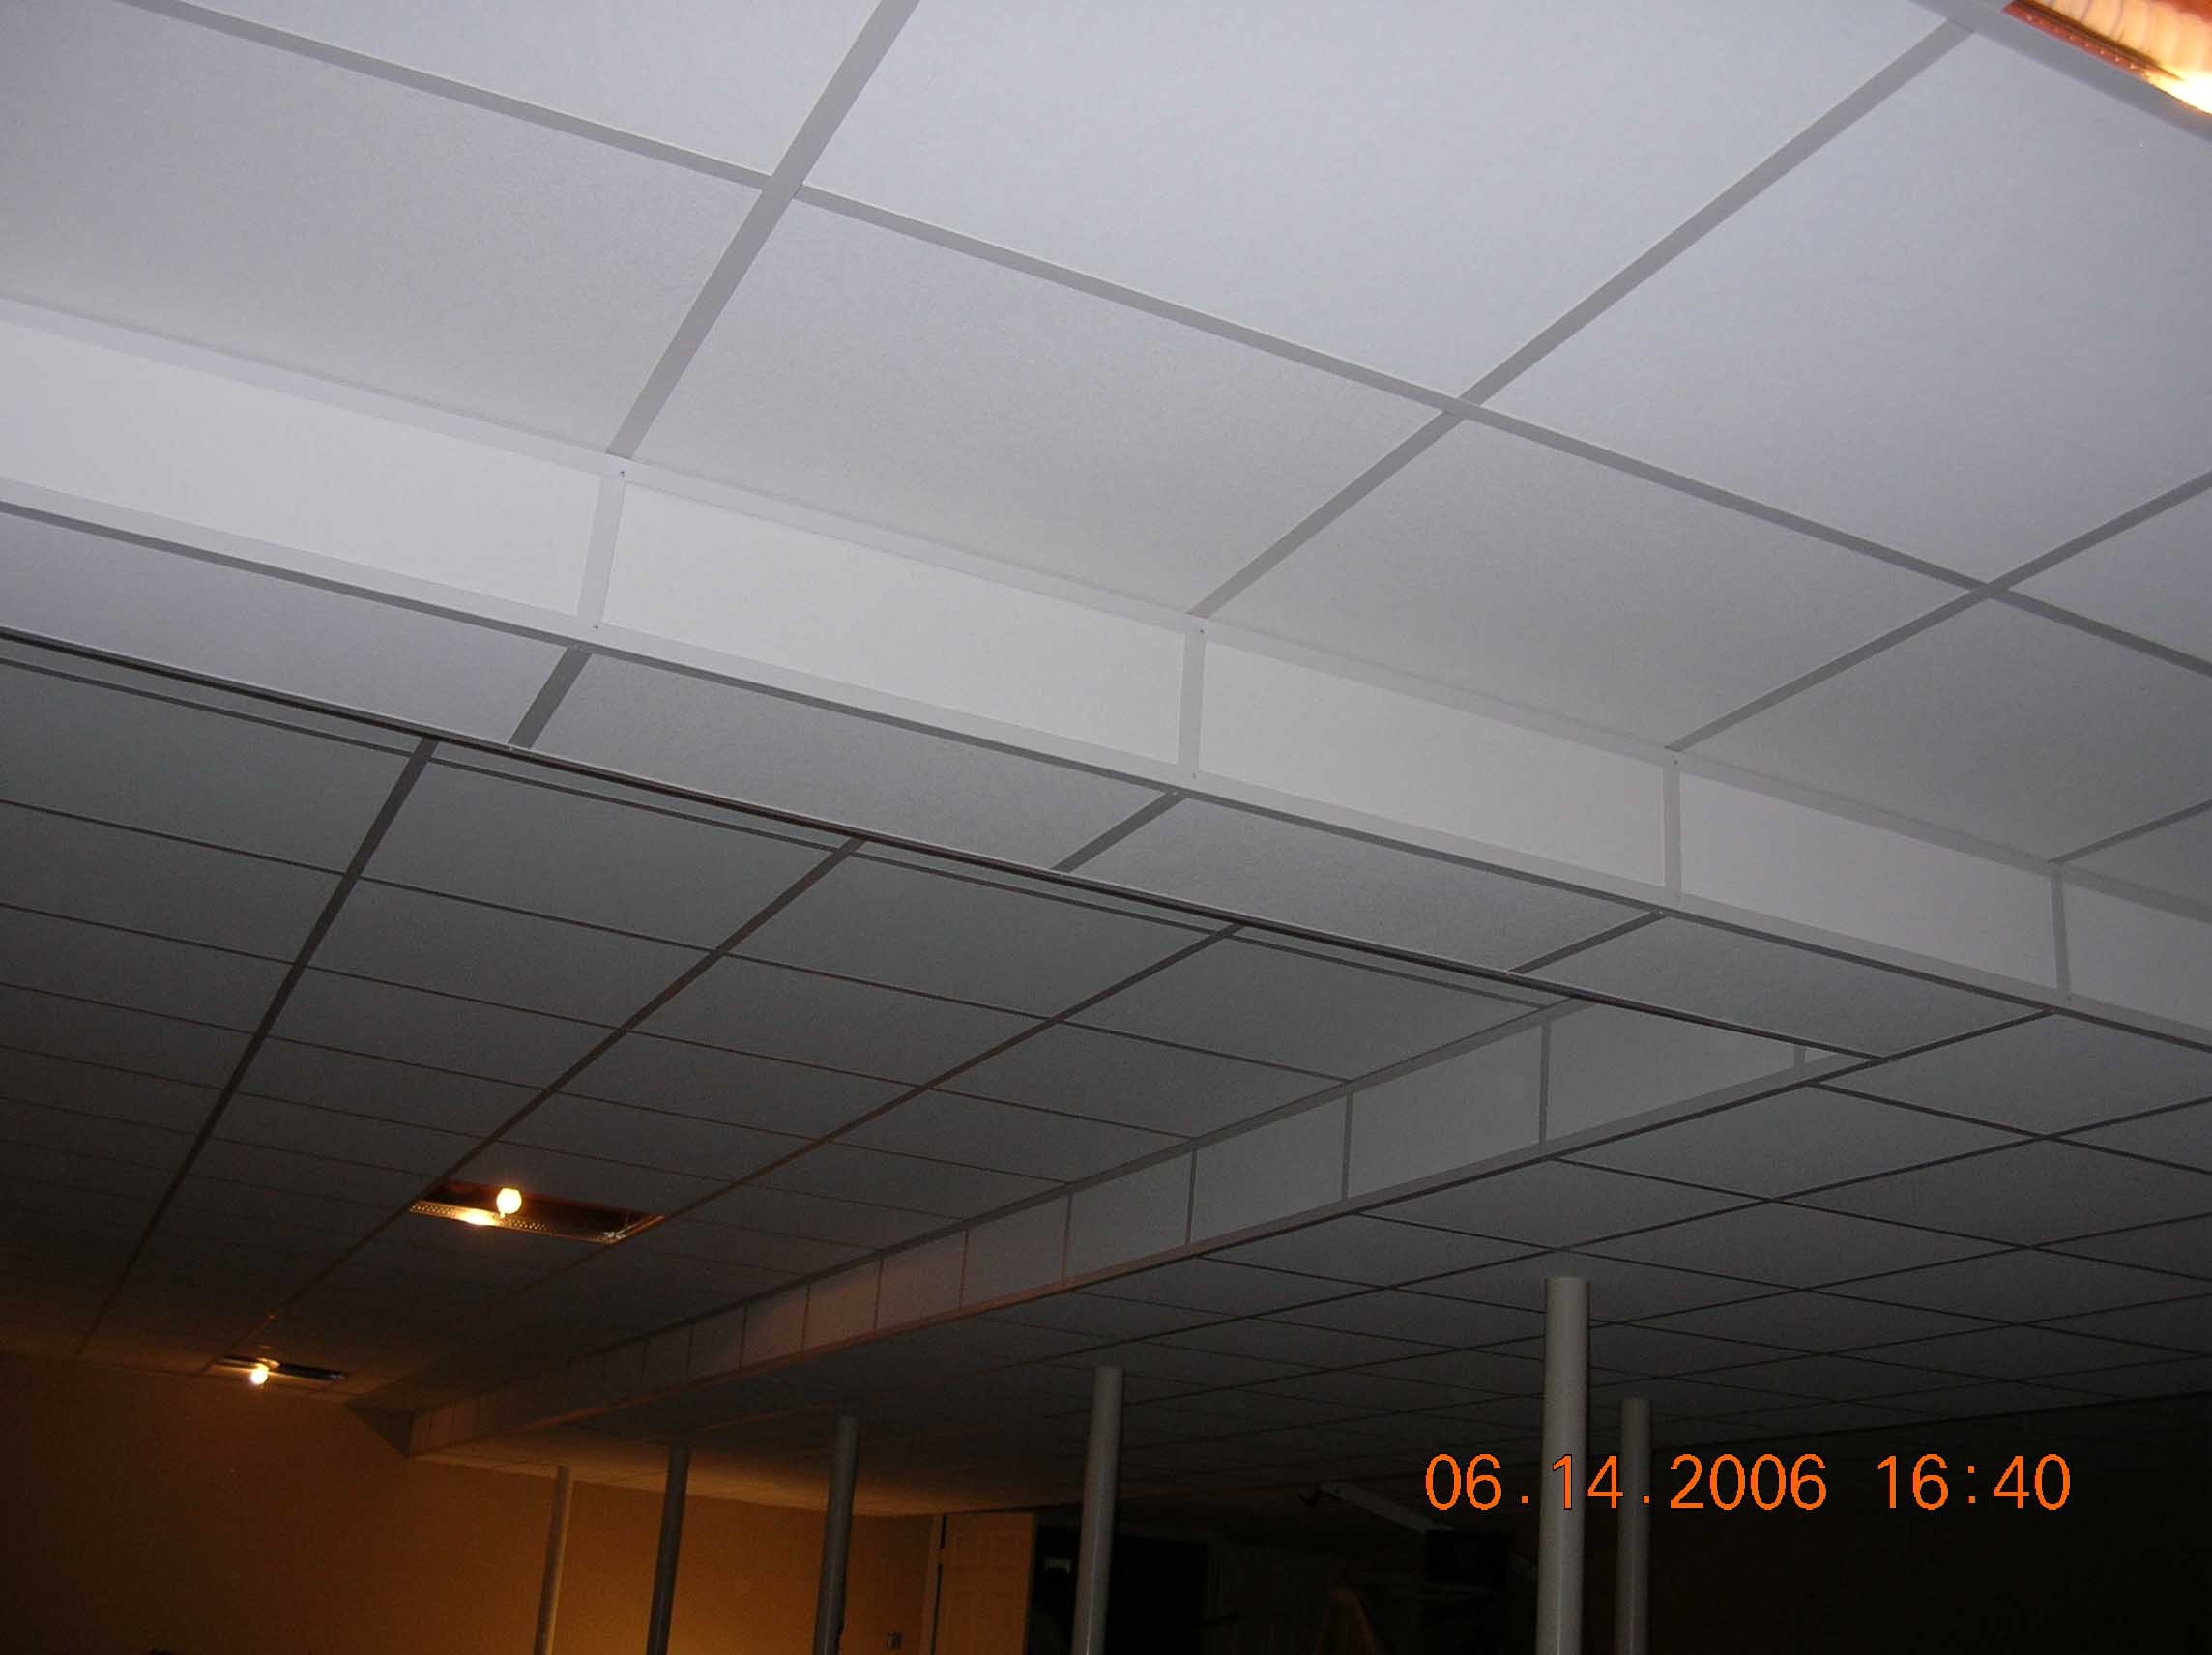 Ceiling Tiles For Low Basement Ceiling Tiles For Low Basement white painted basement ceiling tiles for low basement ceiling ideas 2288 X 1712